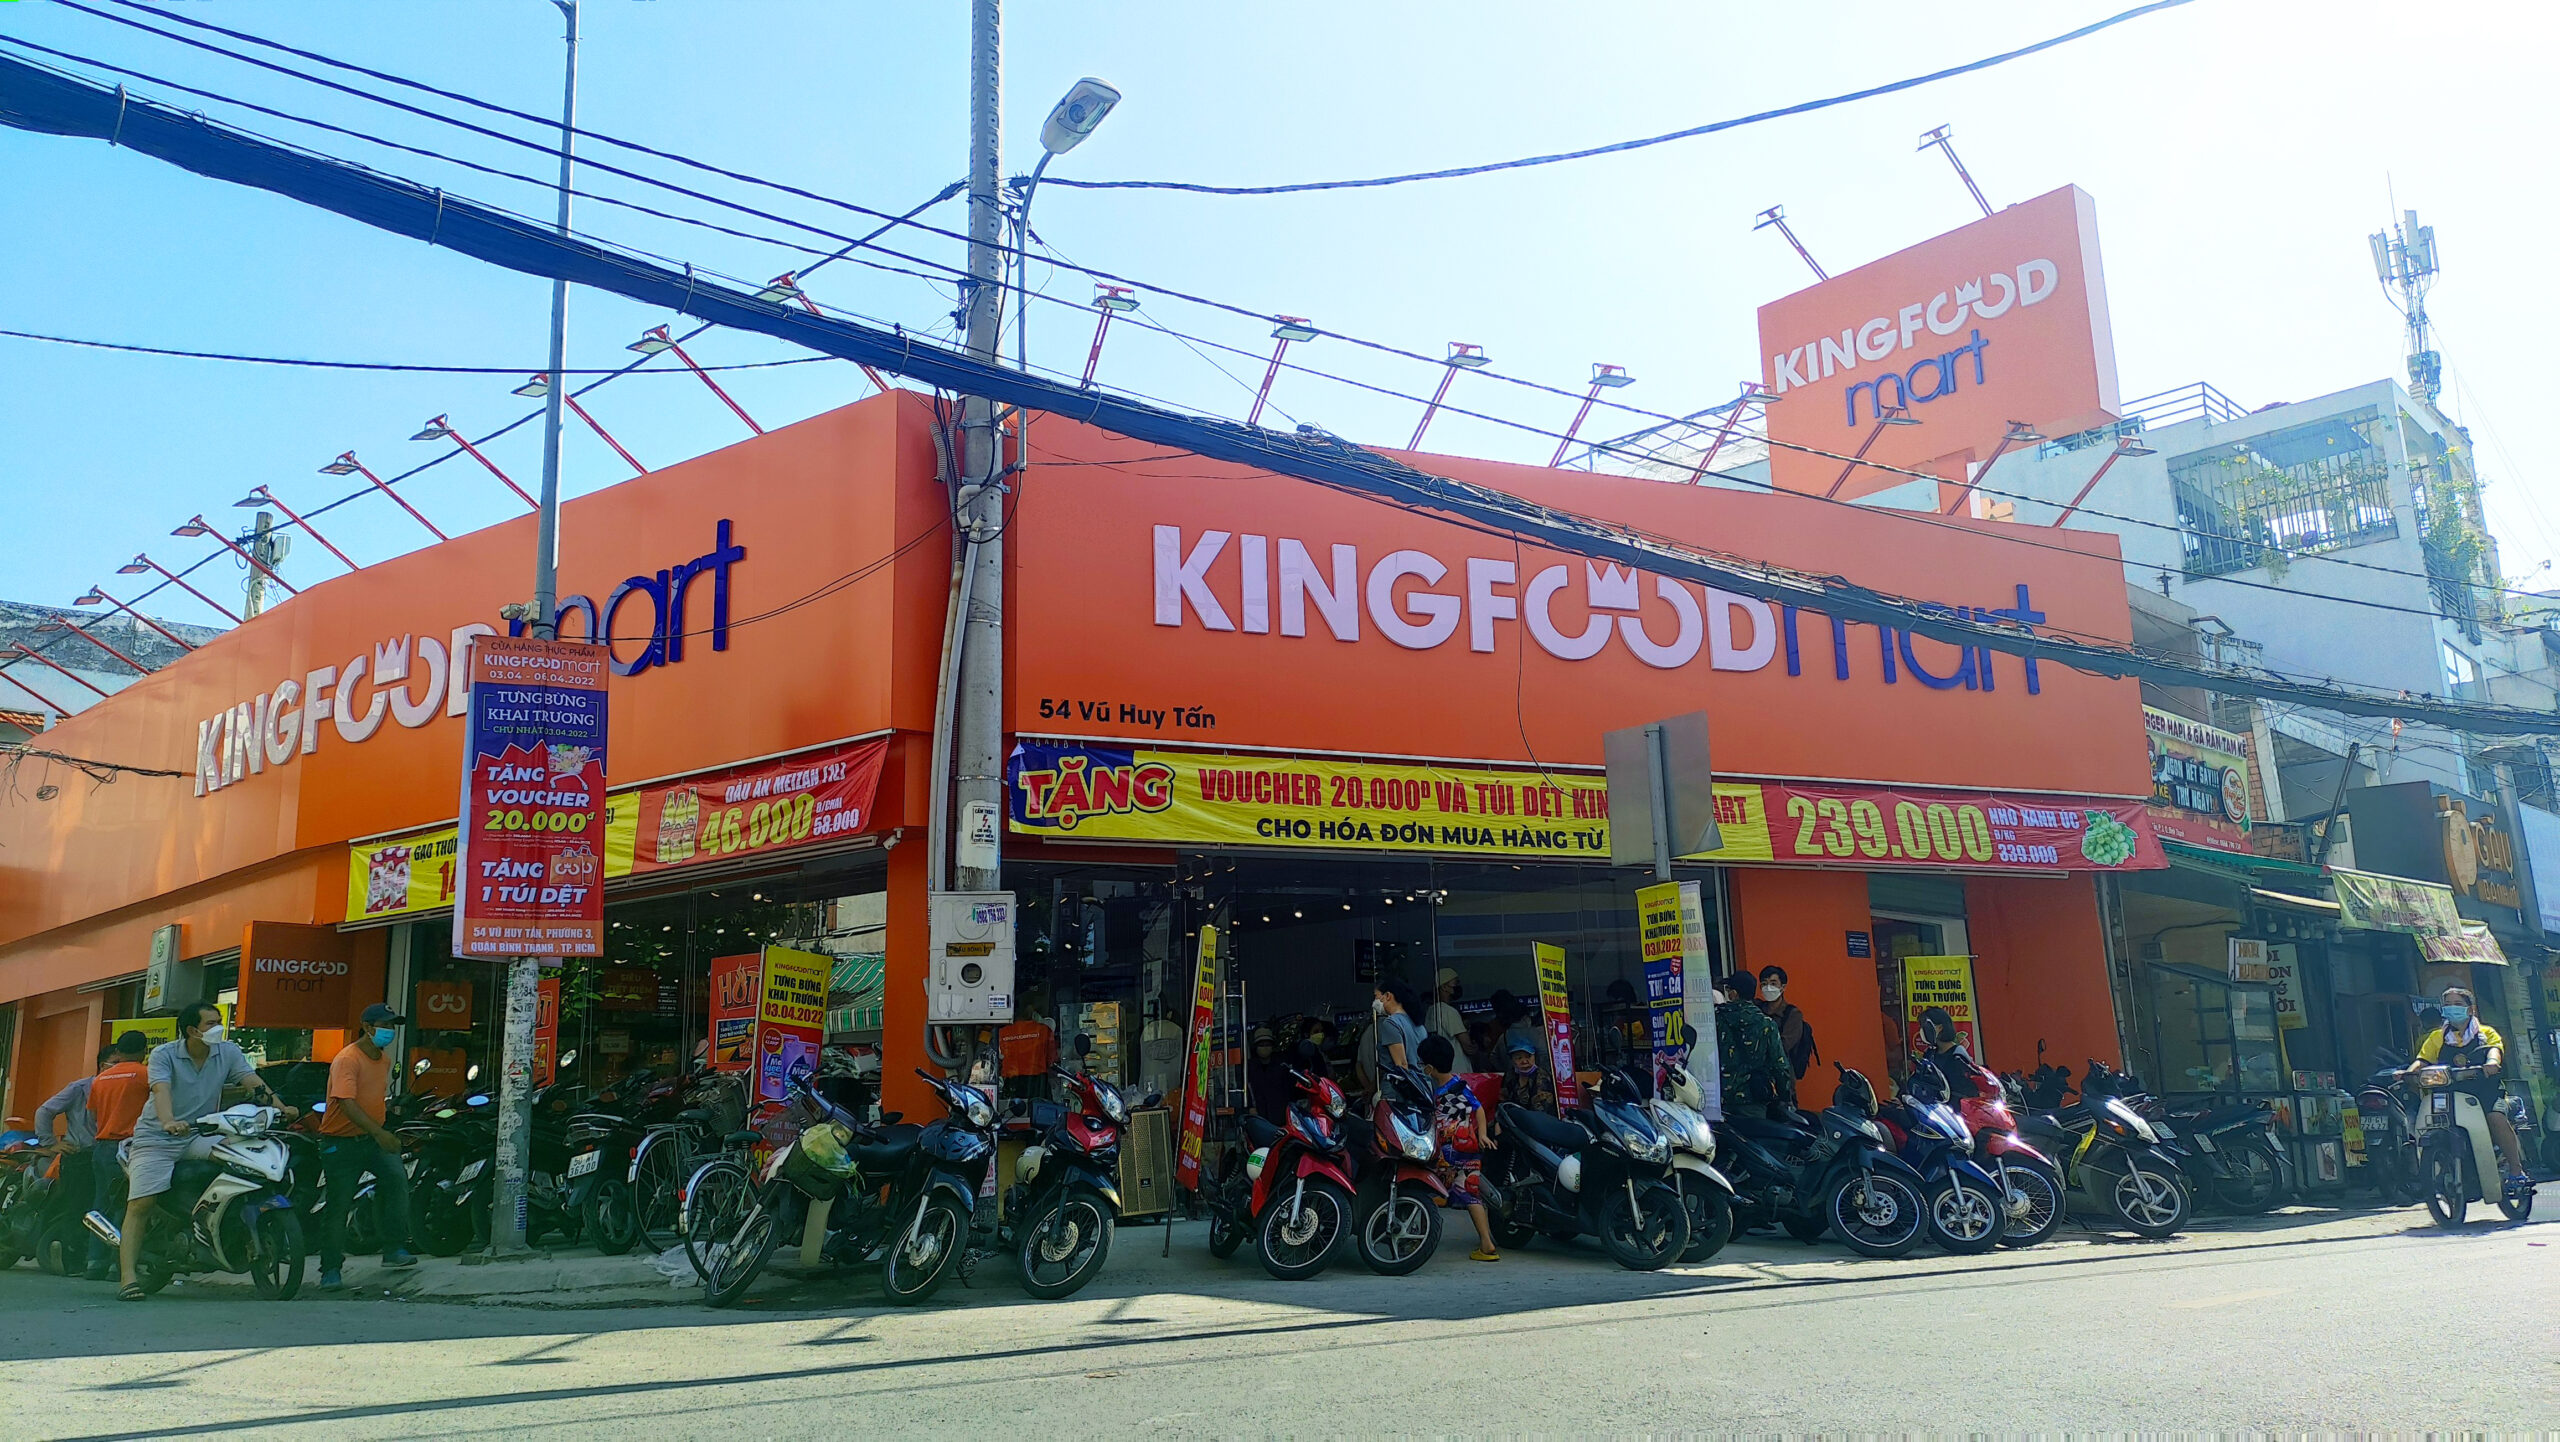 Kingfoodmart Vũ Huy Tấn